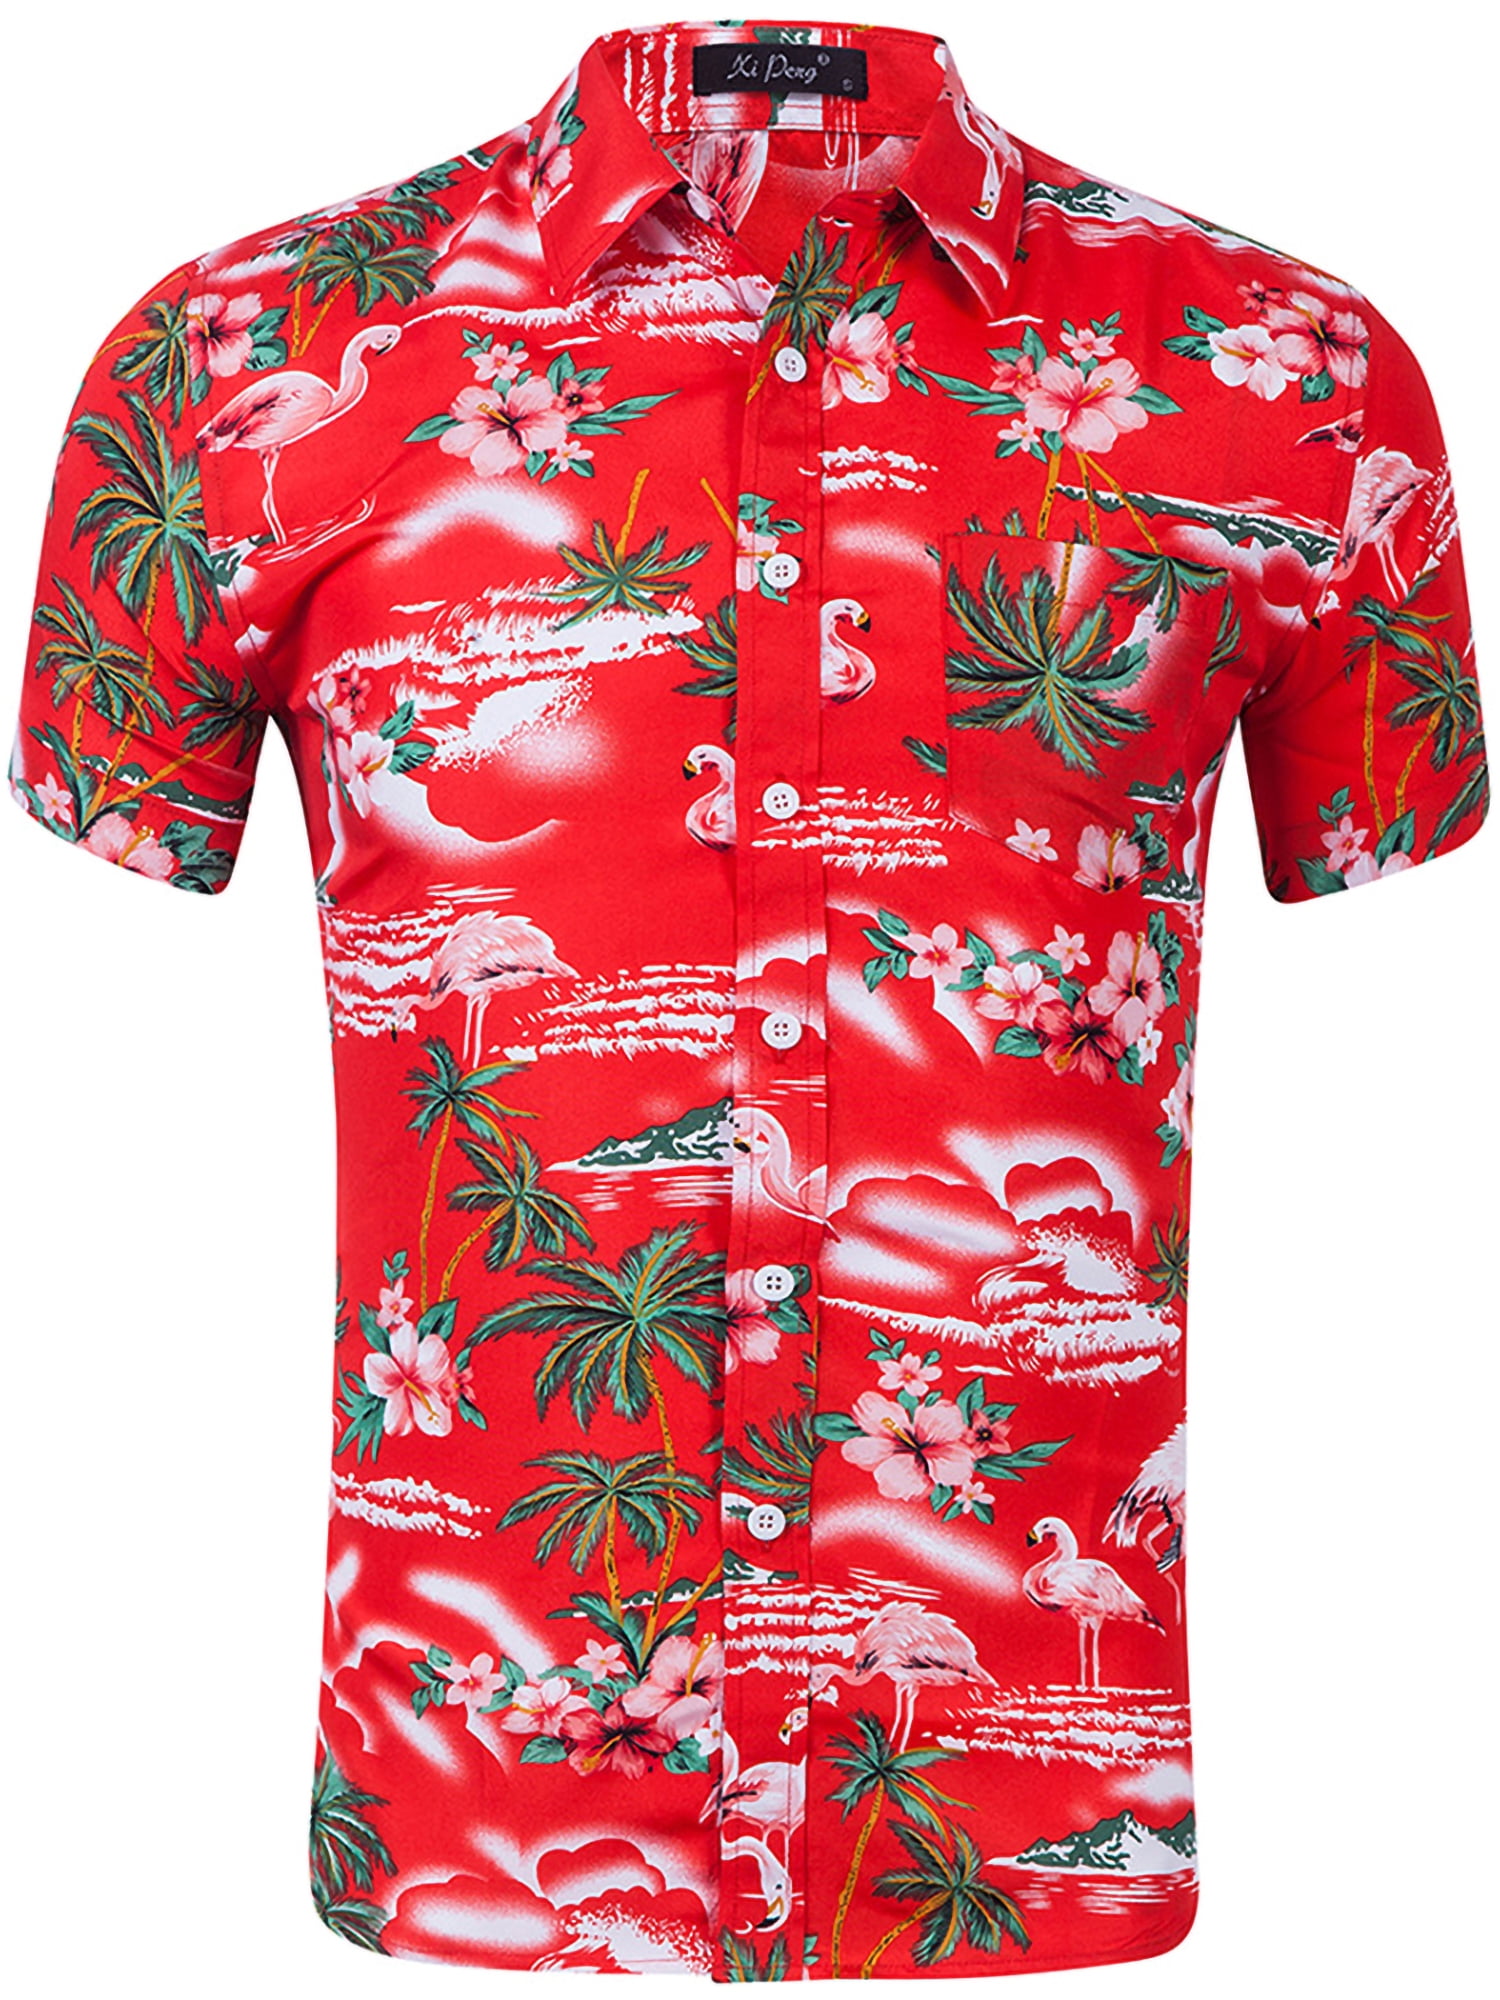 iCKER Mens Hawaiian Shirt Casual Button Down Shirt Short Sleeve Party Holiday Beach Tropical Summer Shirt 